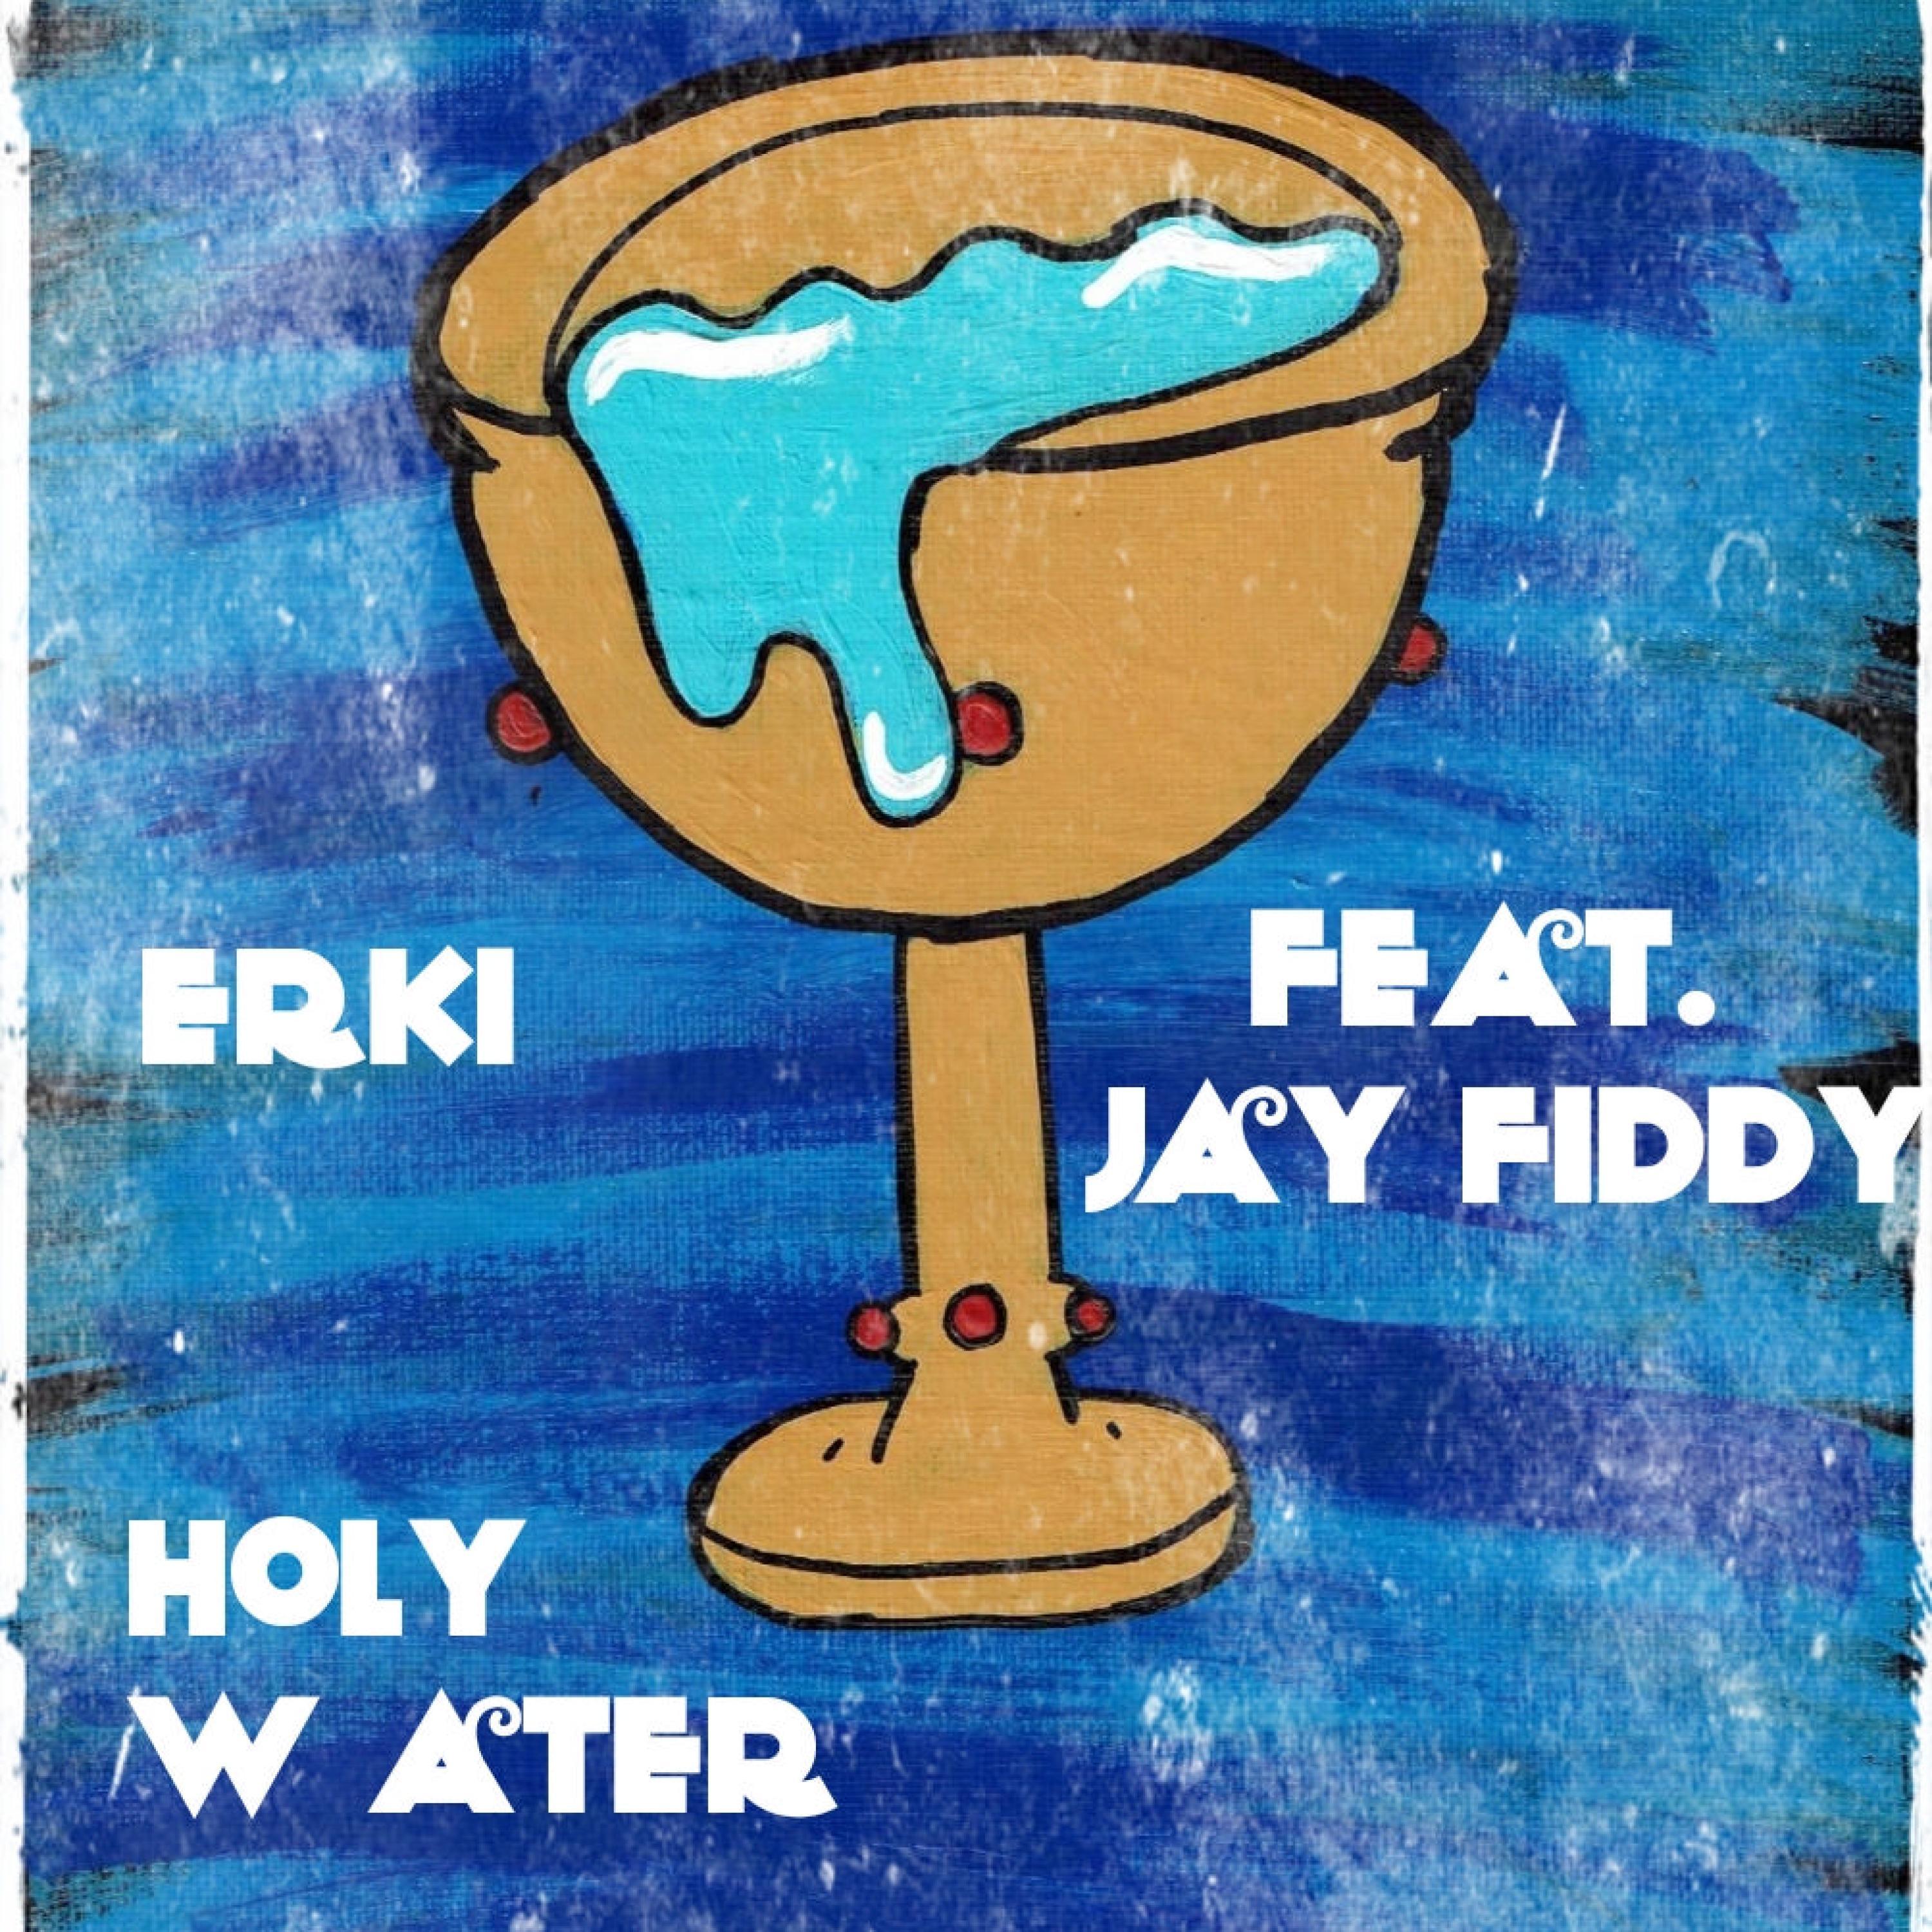 Ramandla - Holy Water (feat. Jay Fiddy)